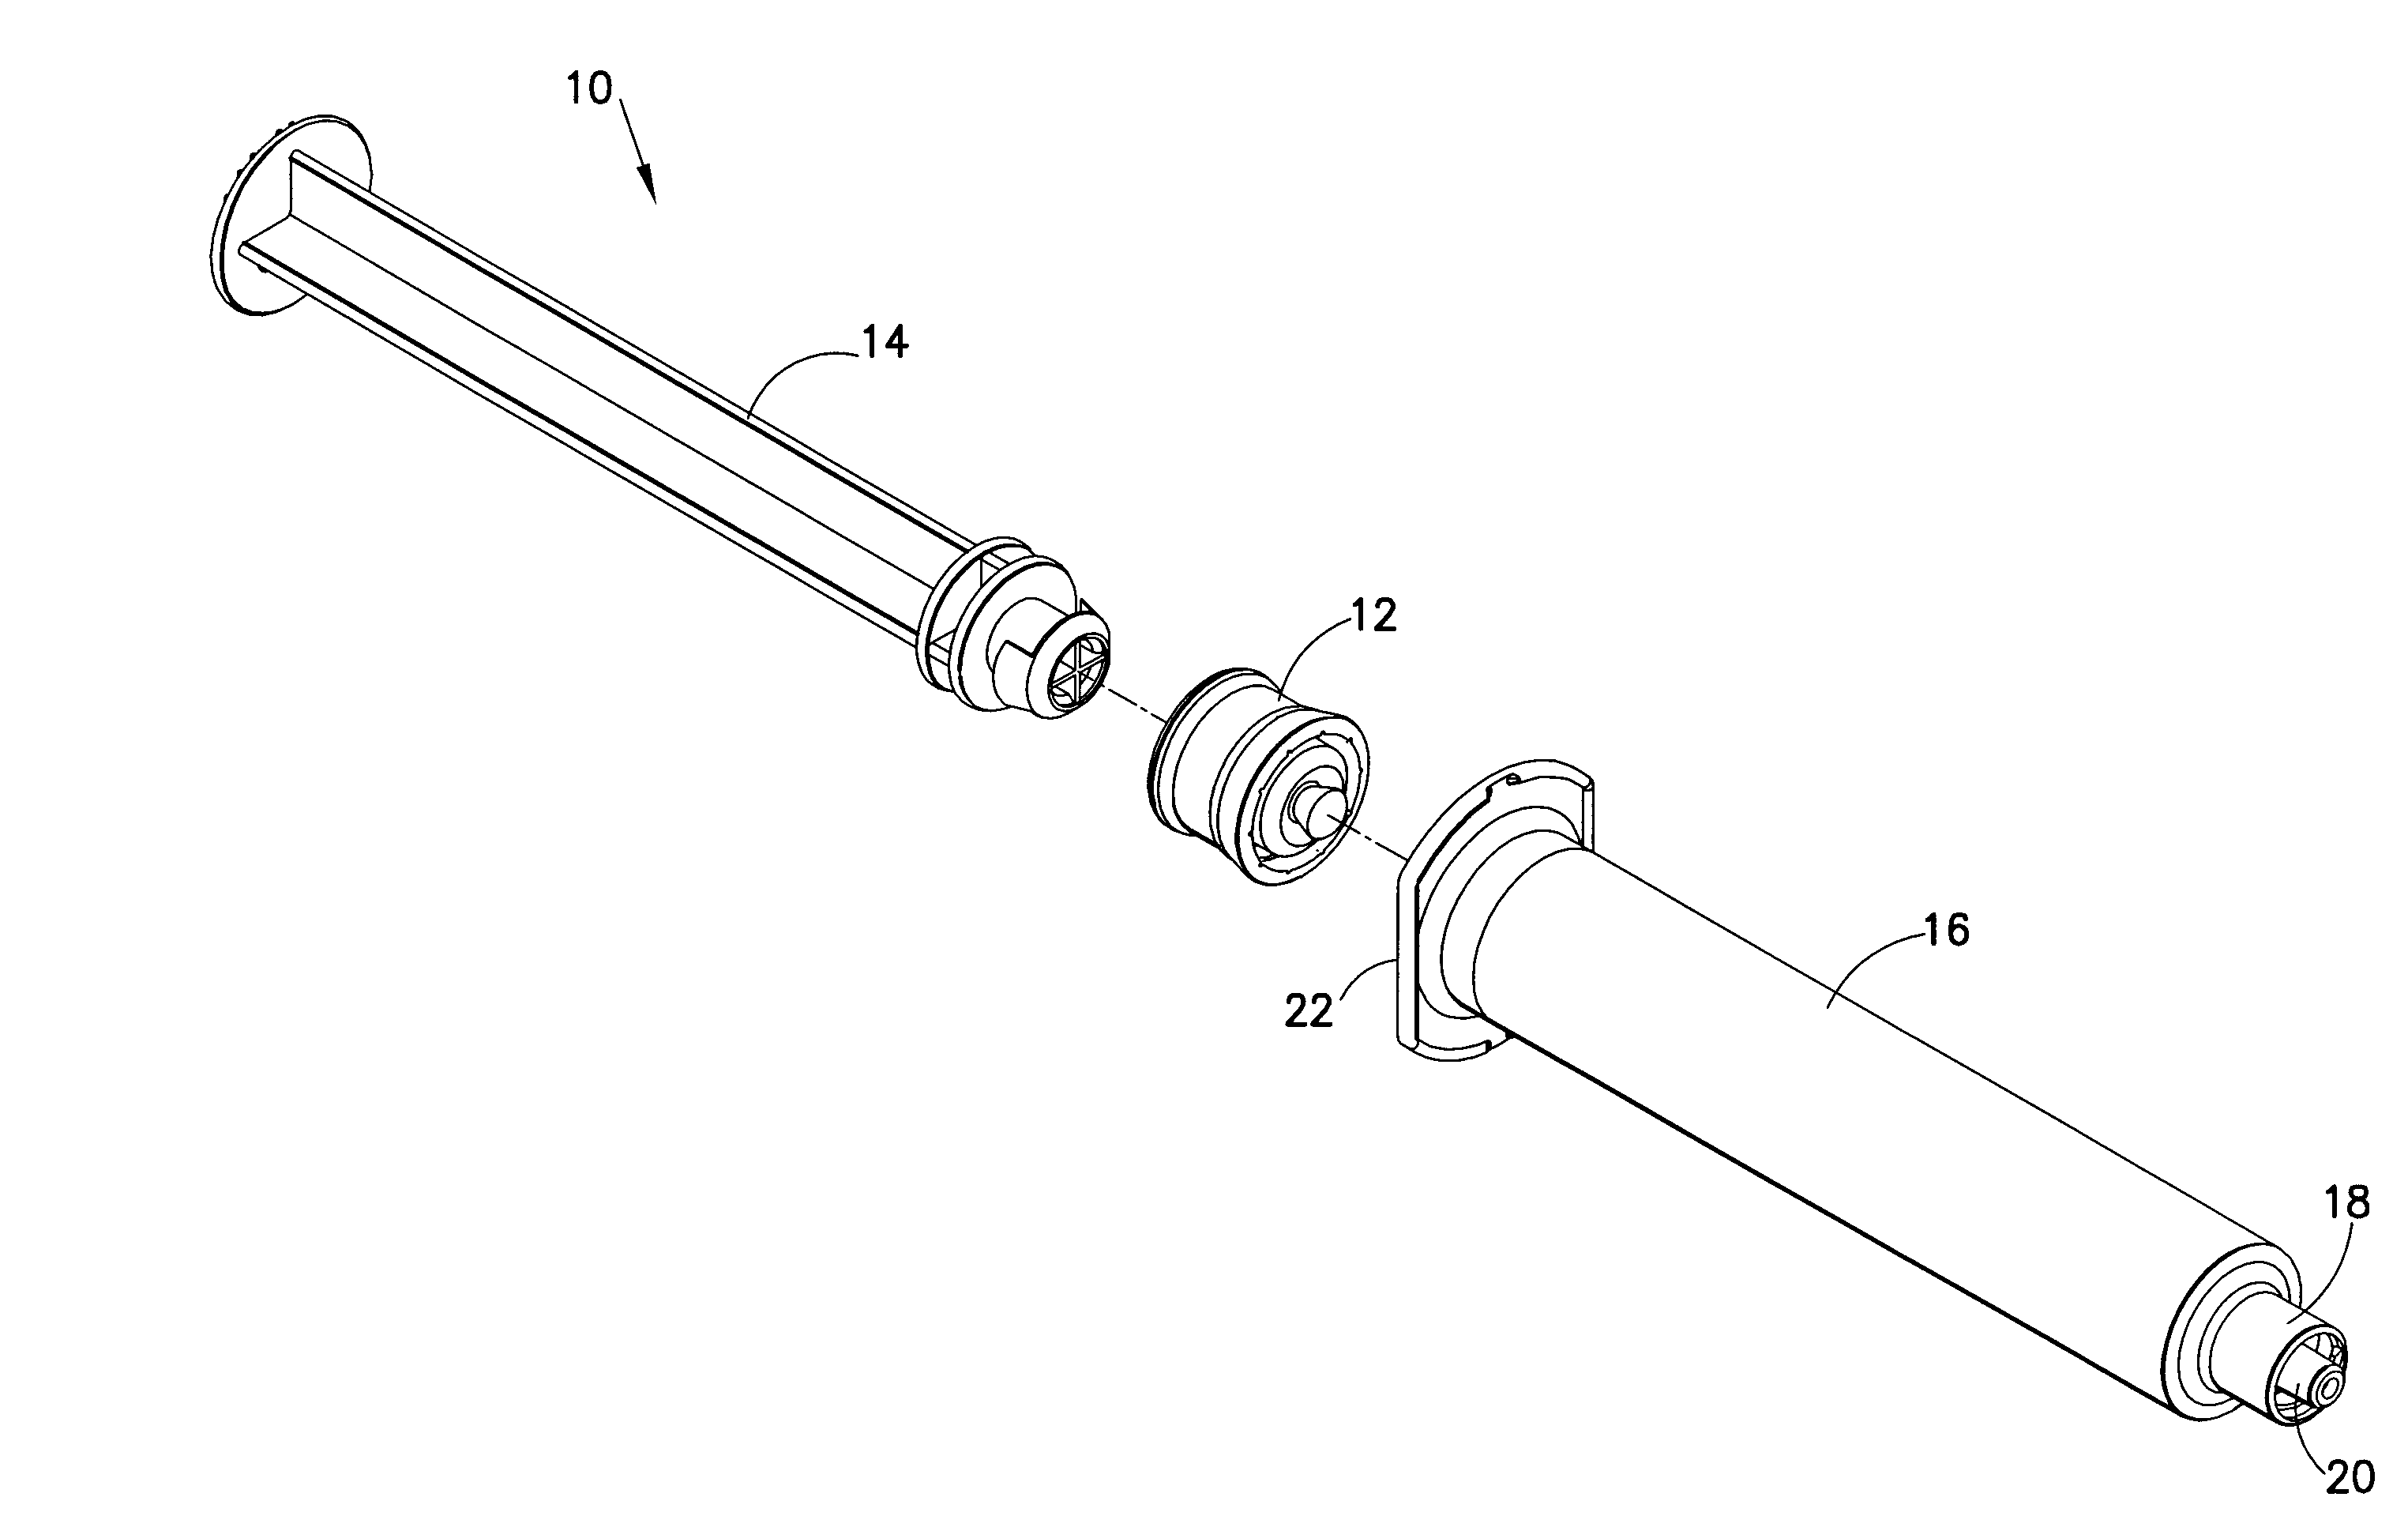 Positive displacement stopper for a pre-filled syringe